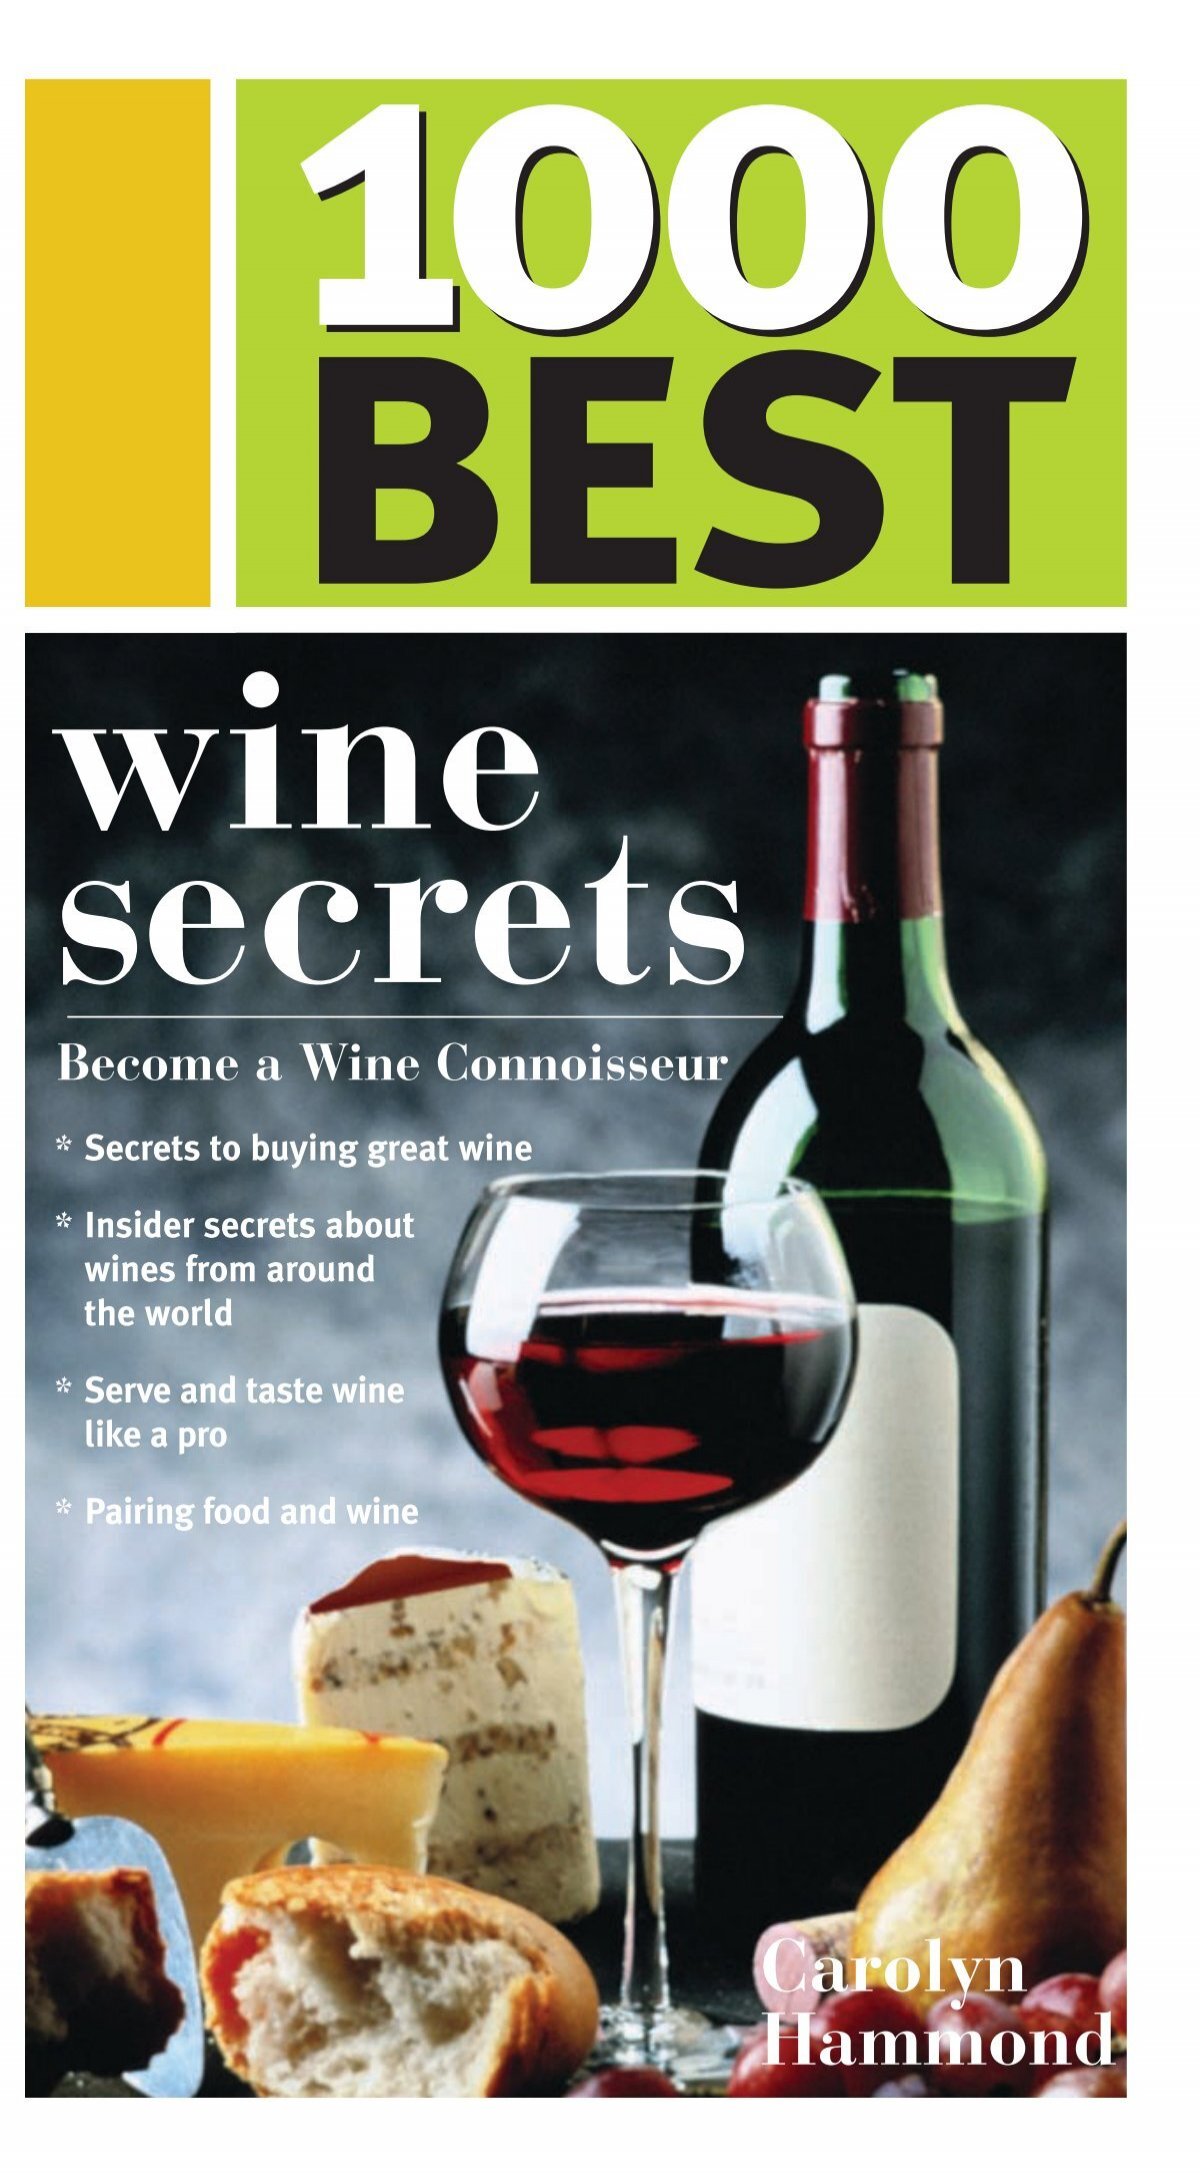 Stanley Wines Cabernet - Merlot, Australia  prices, stores, product  reviews & market trends